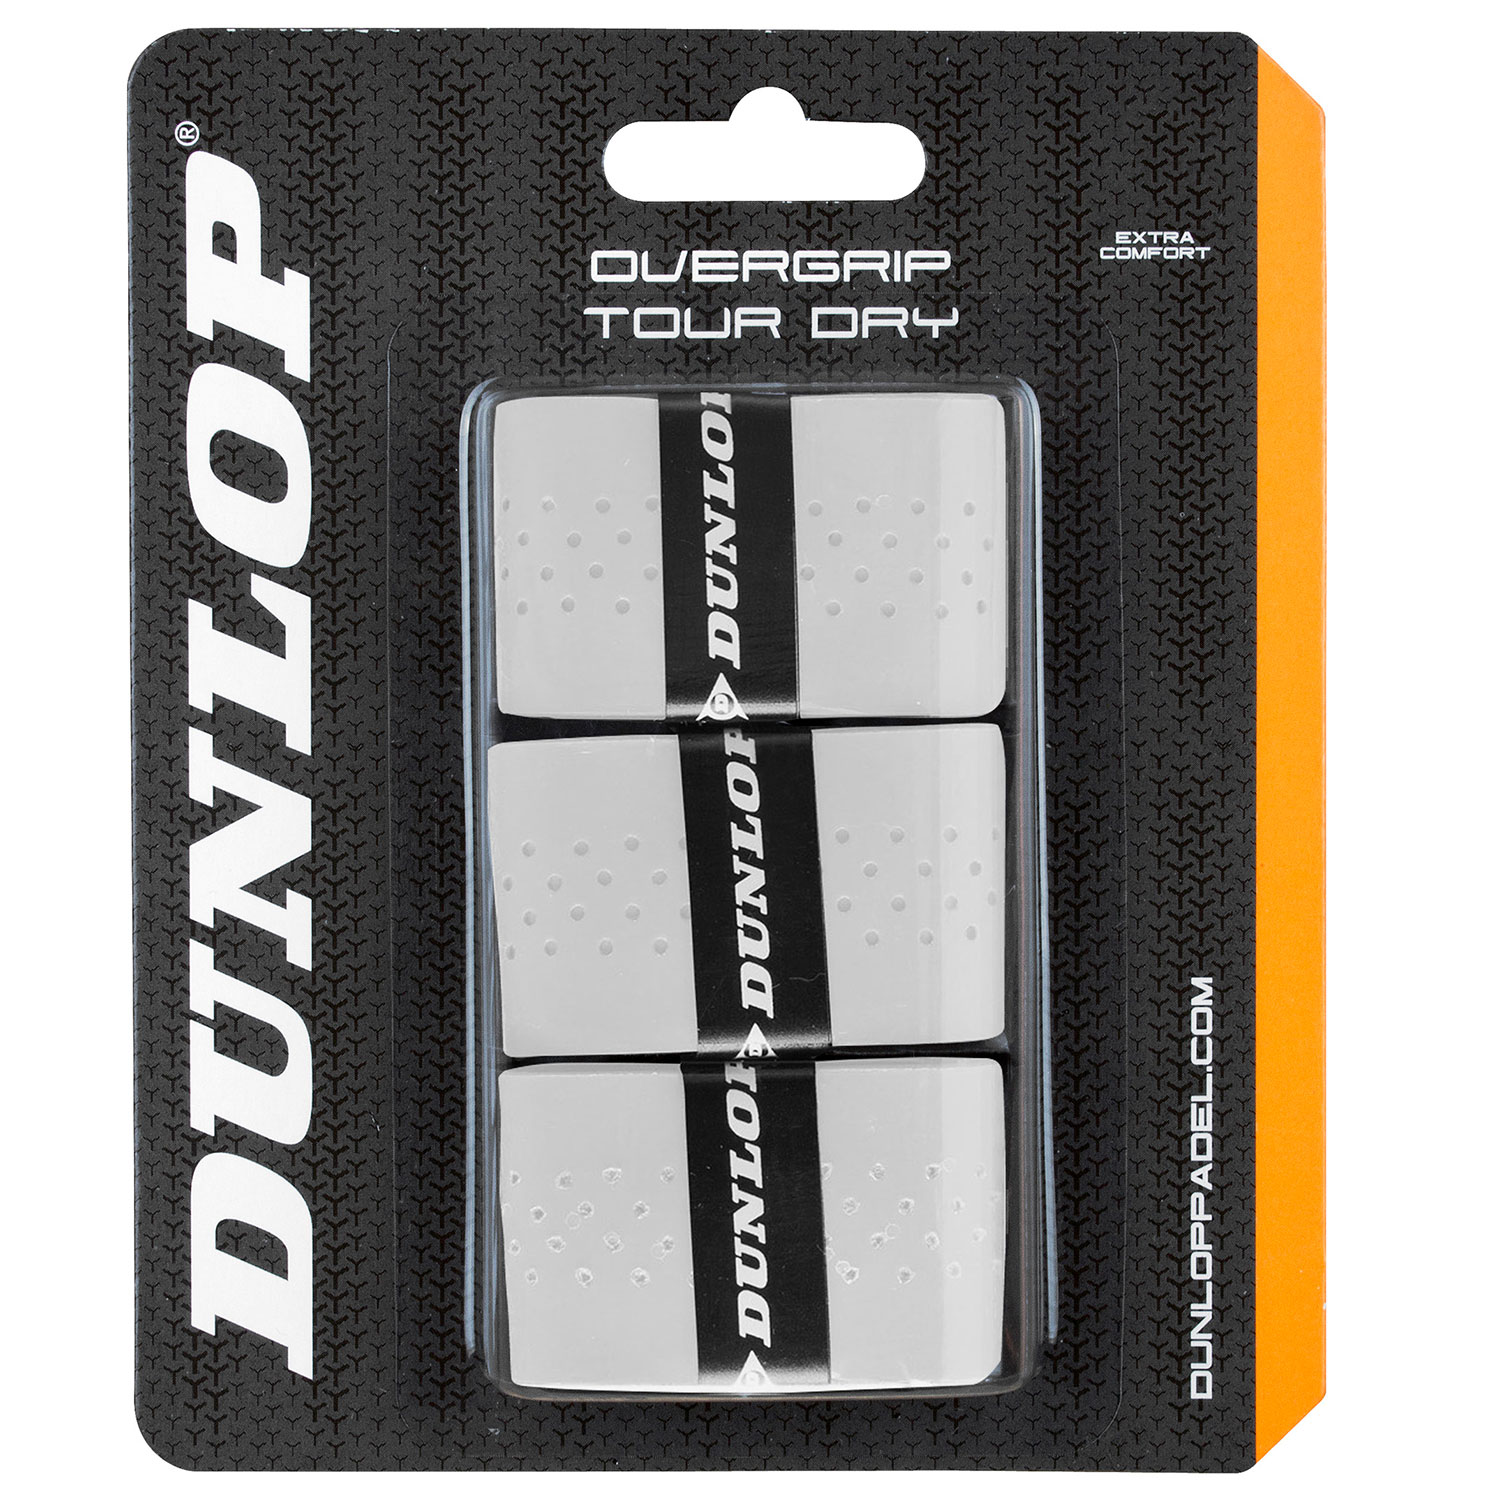 Dunlop Tour Dry x 3 Sobregrip - White